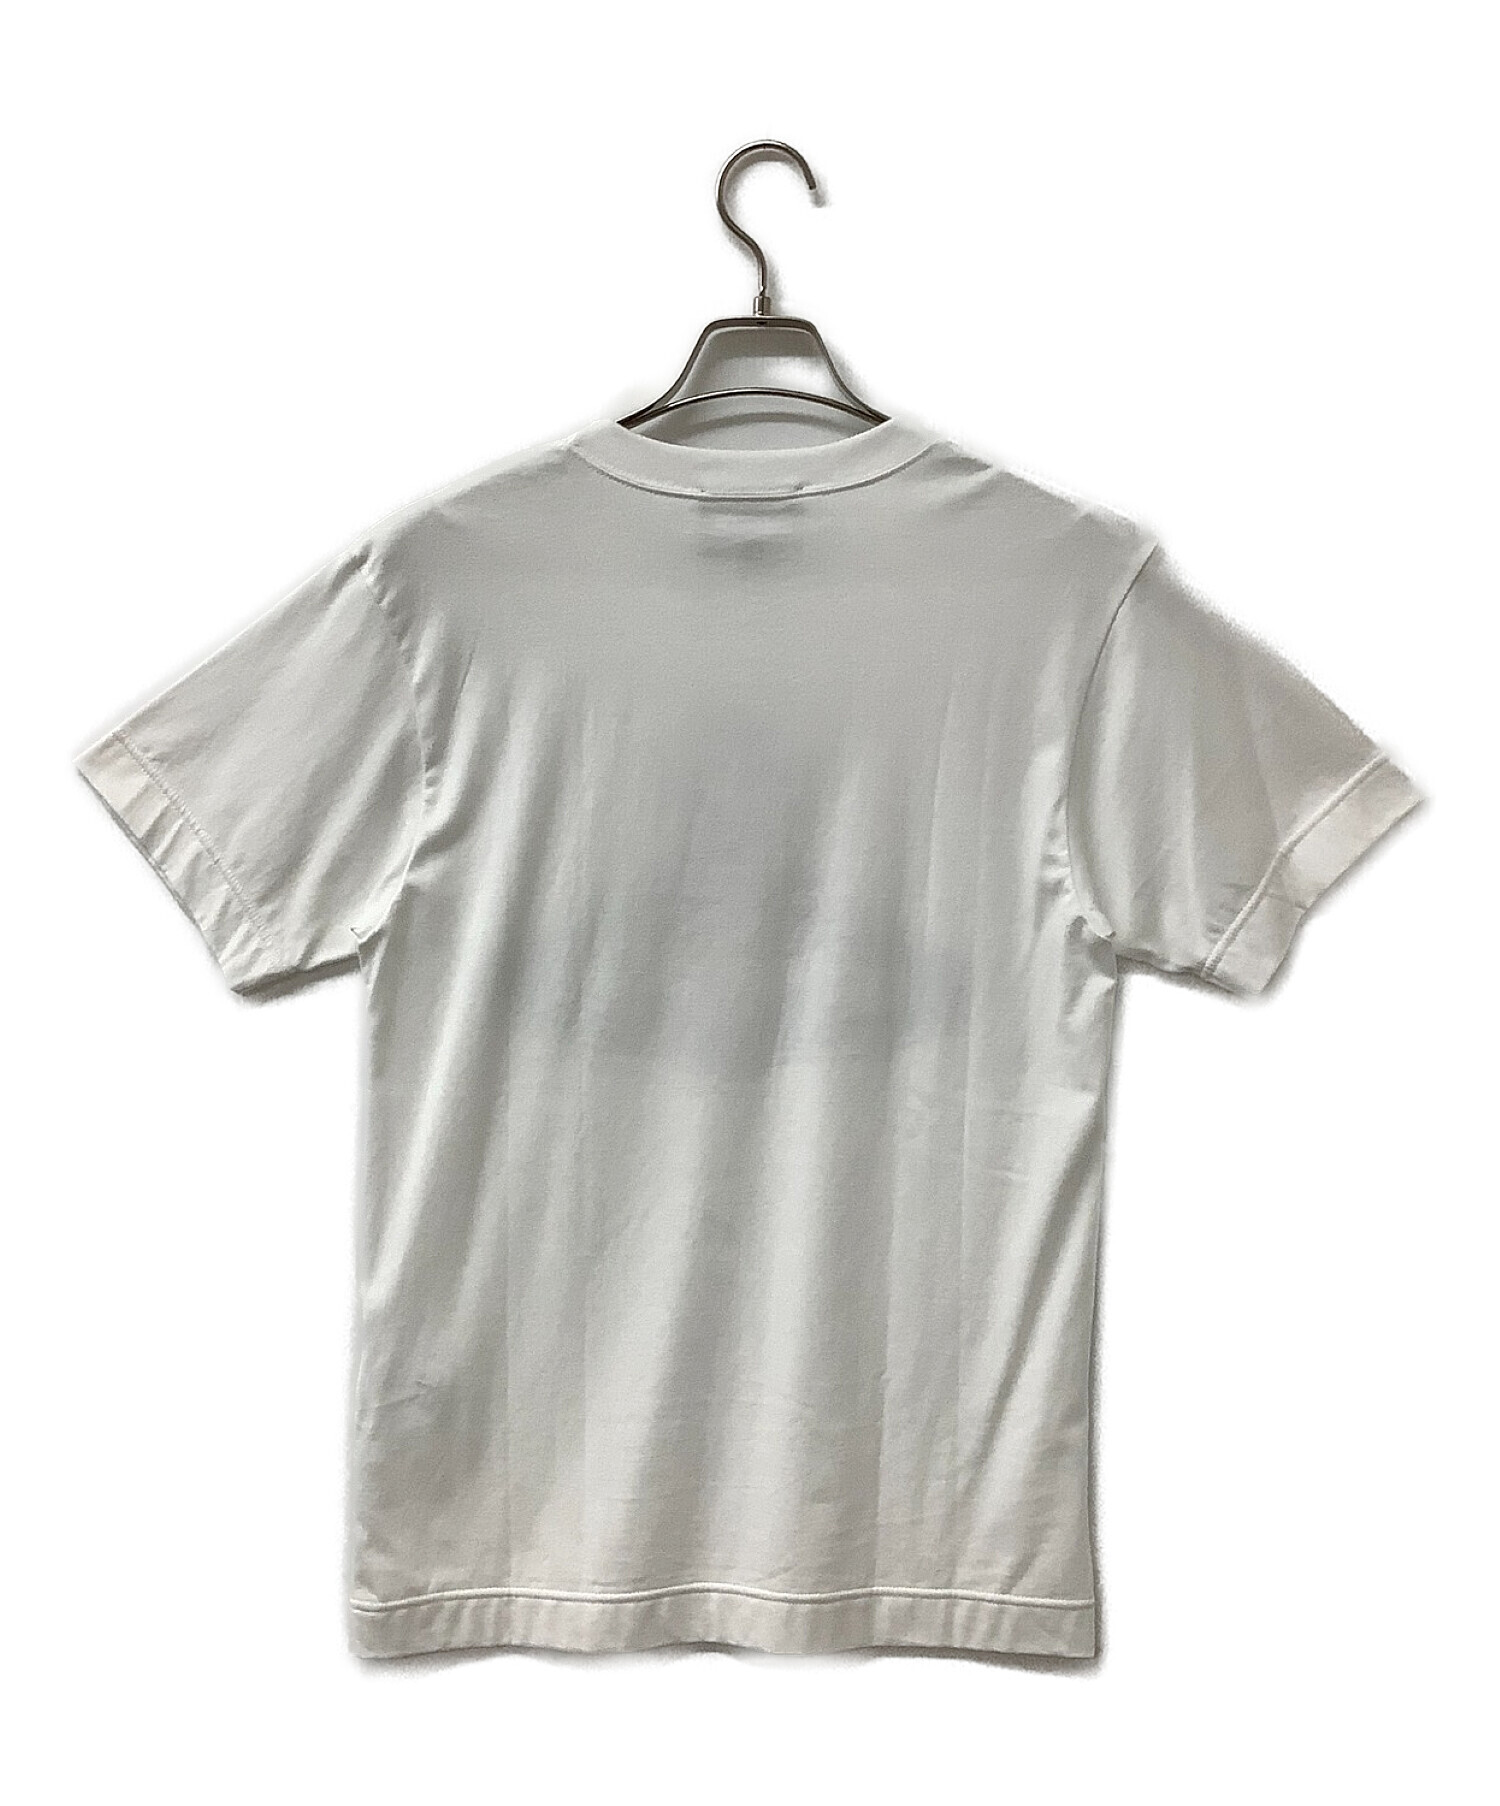 Vivienne Westwood (ヴィヴィアンウエストウッド) Tシャツ ホワイト サイズ:42